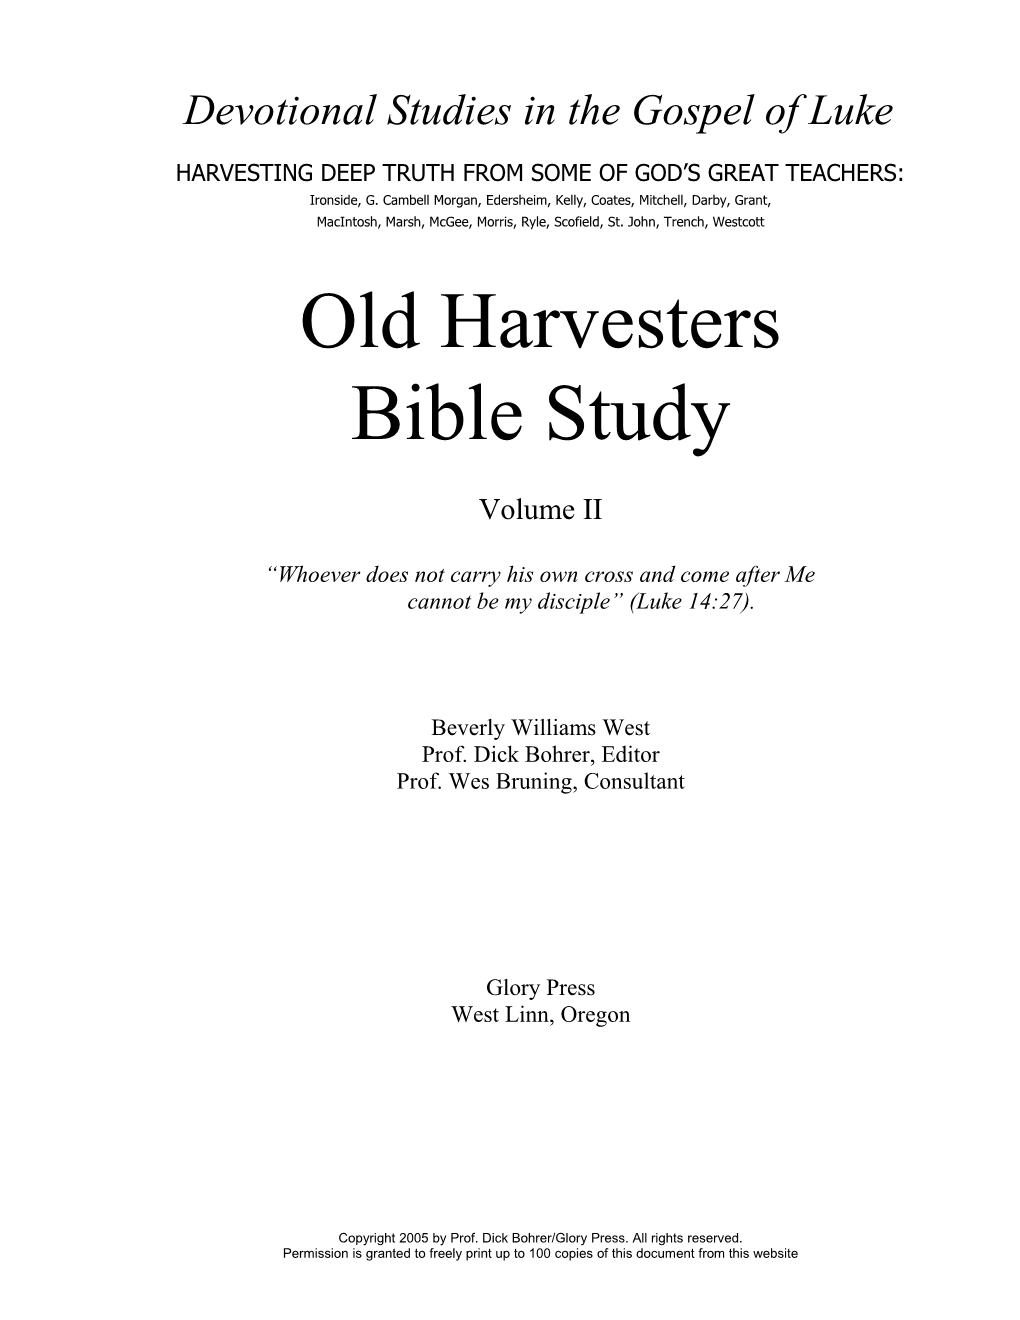 Harvesters Bible Study; Luke Vol II